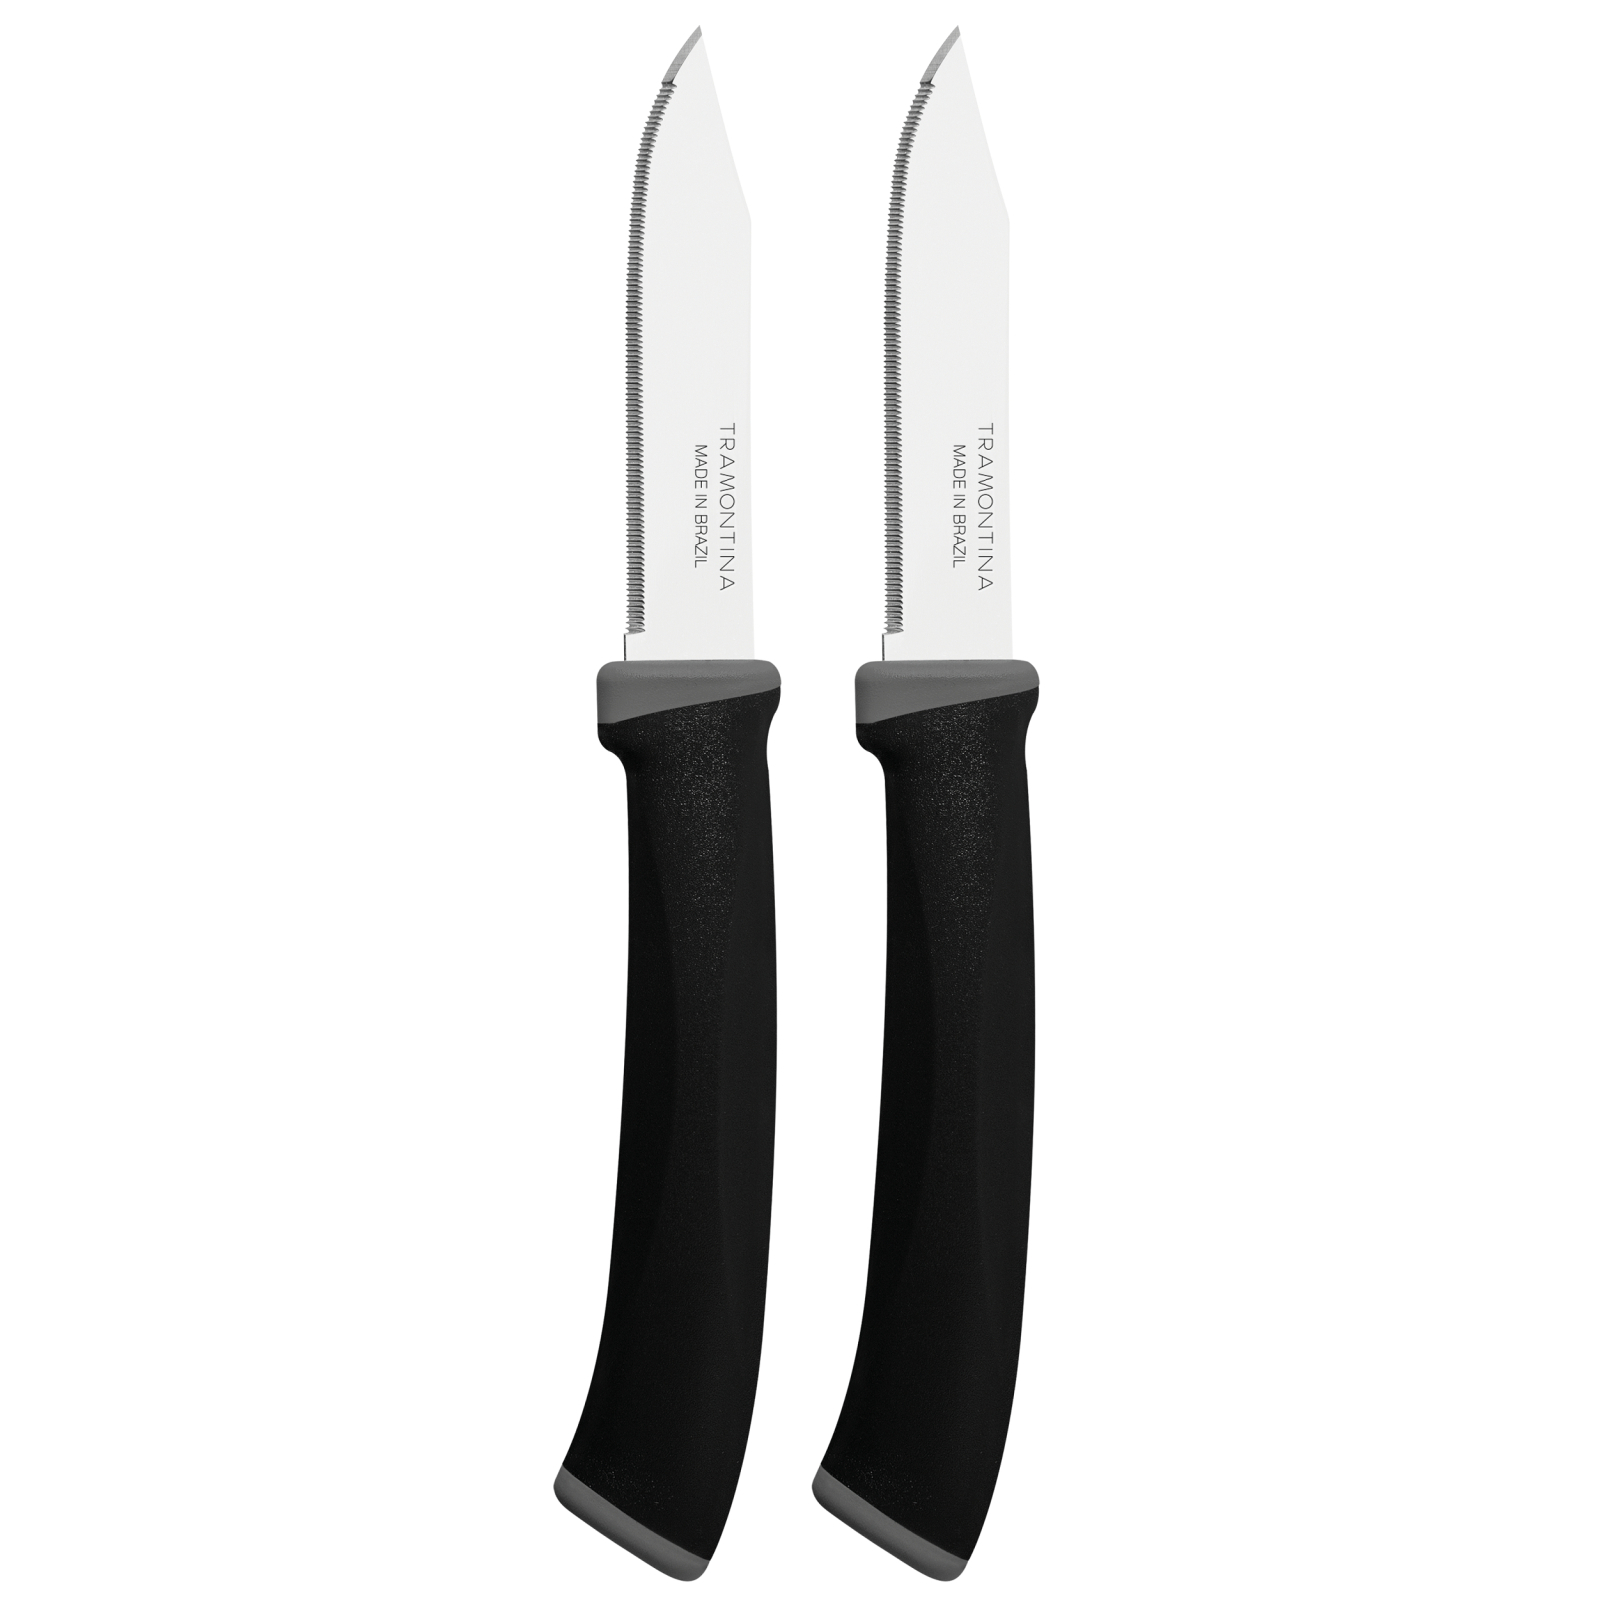 Набір ножів Tramontina Felice Black Vegetable Serrate 76 мм 2 шт (23491/203)